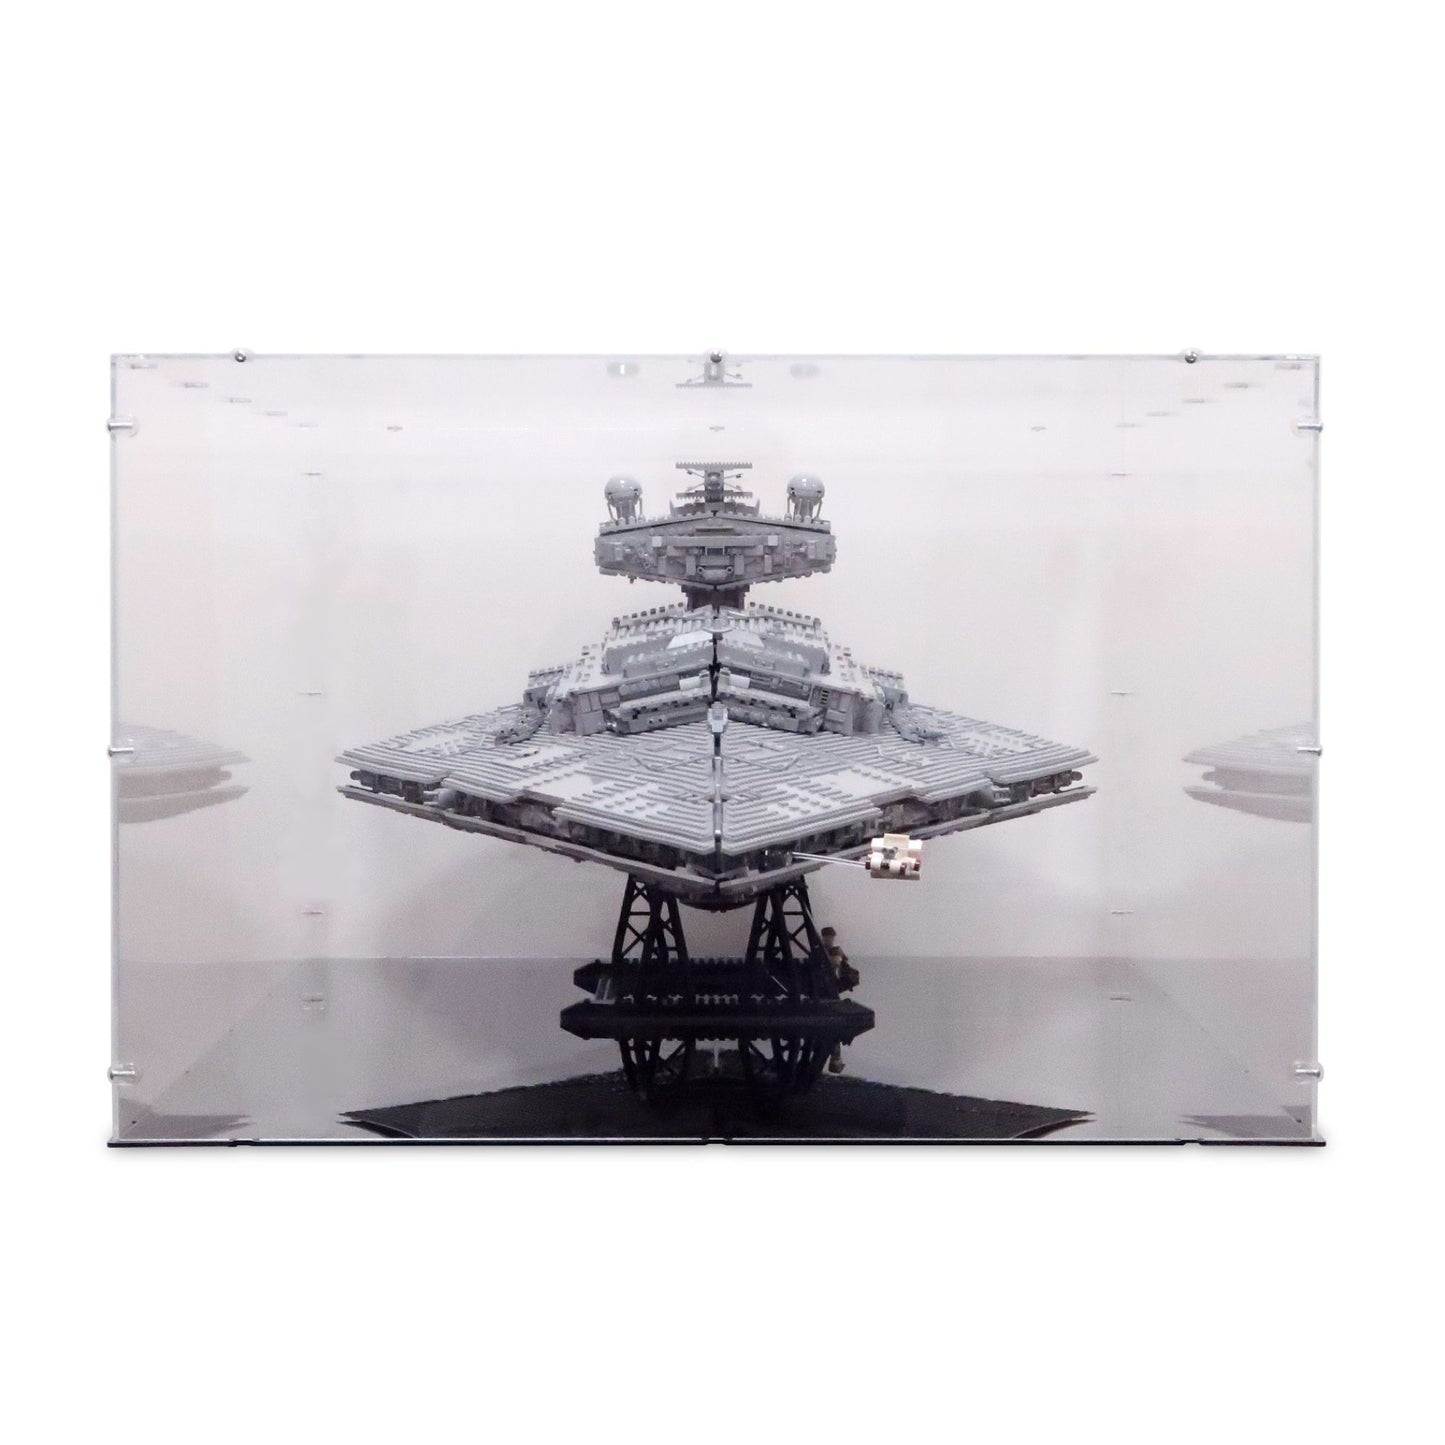 75252 UCS Imperial Star Destroyer Display Case